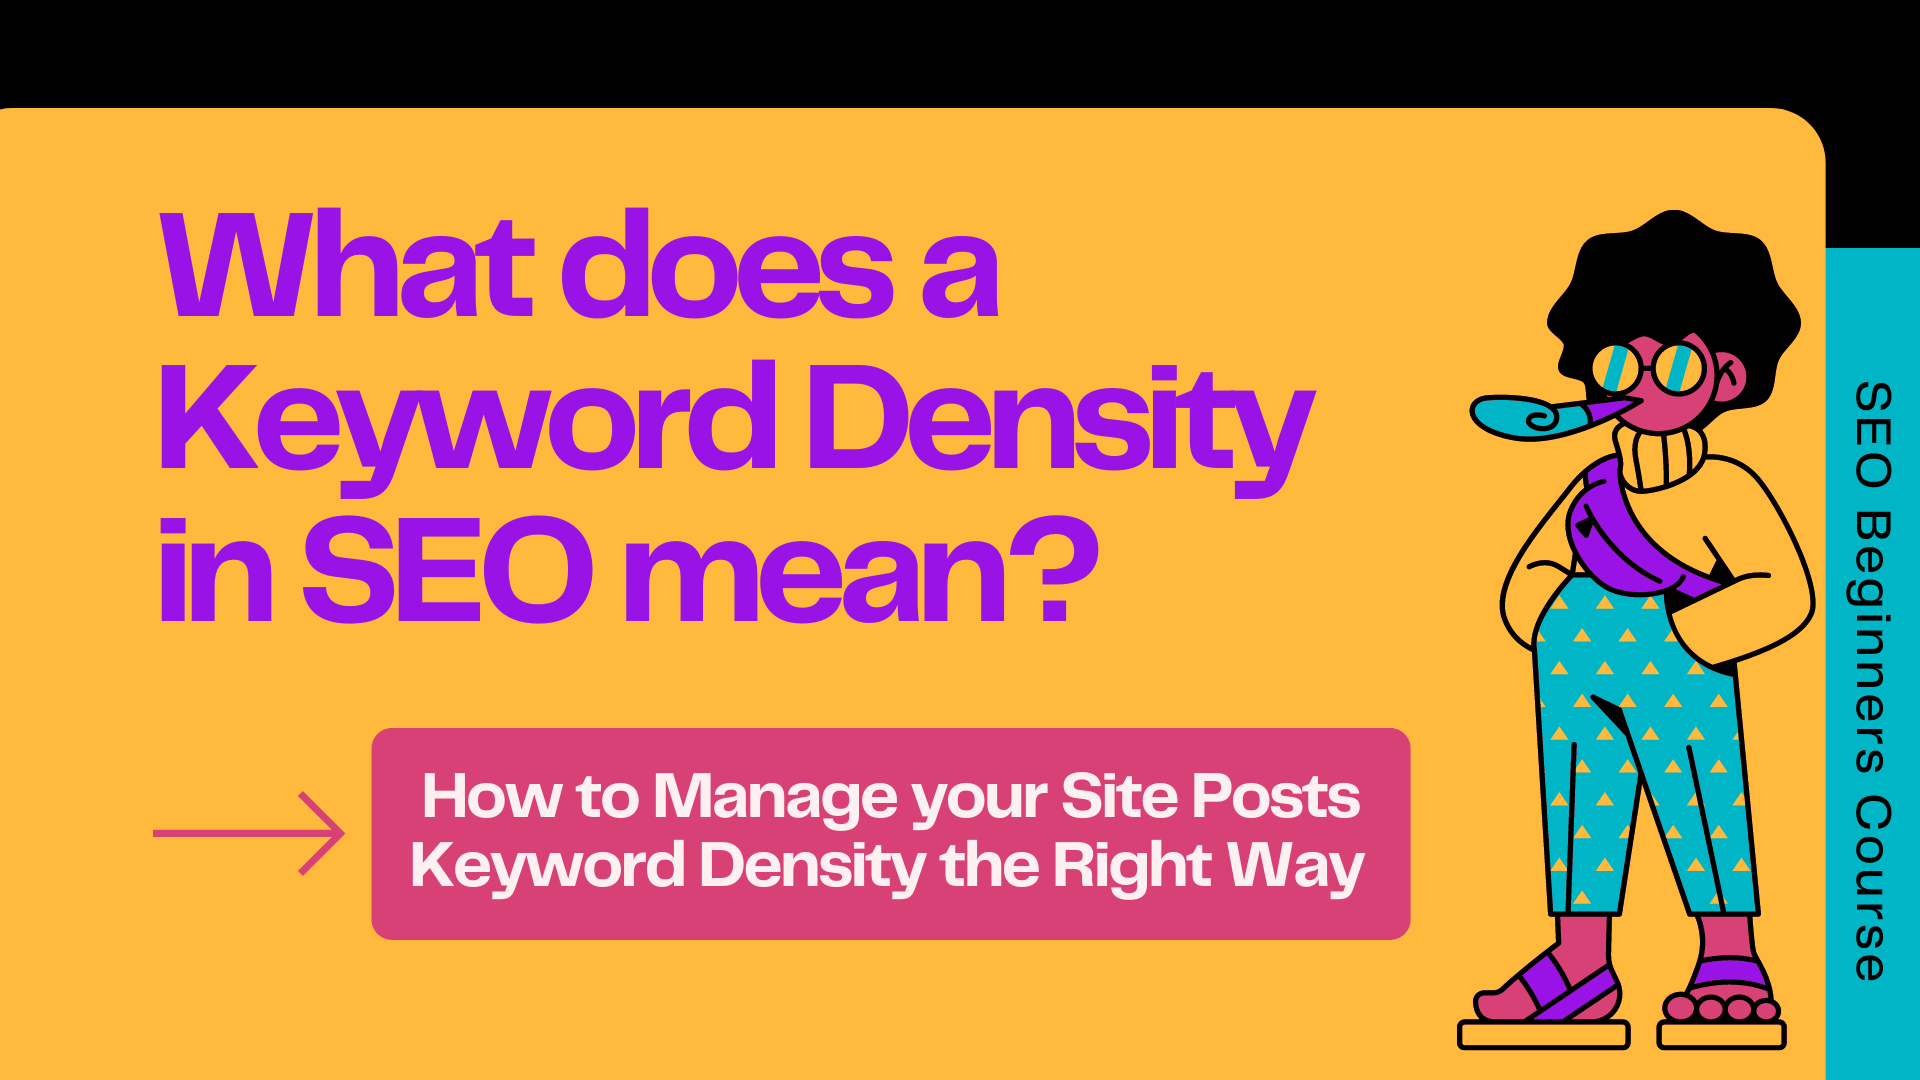 What is a good keyword density?